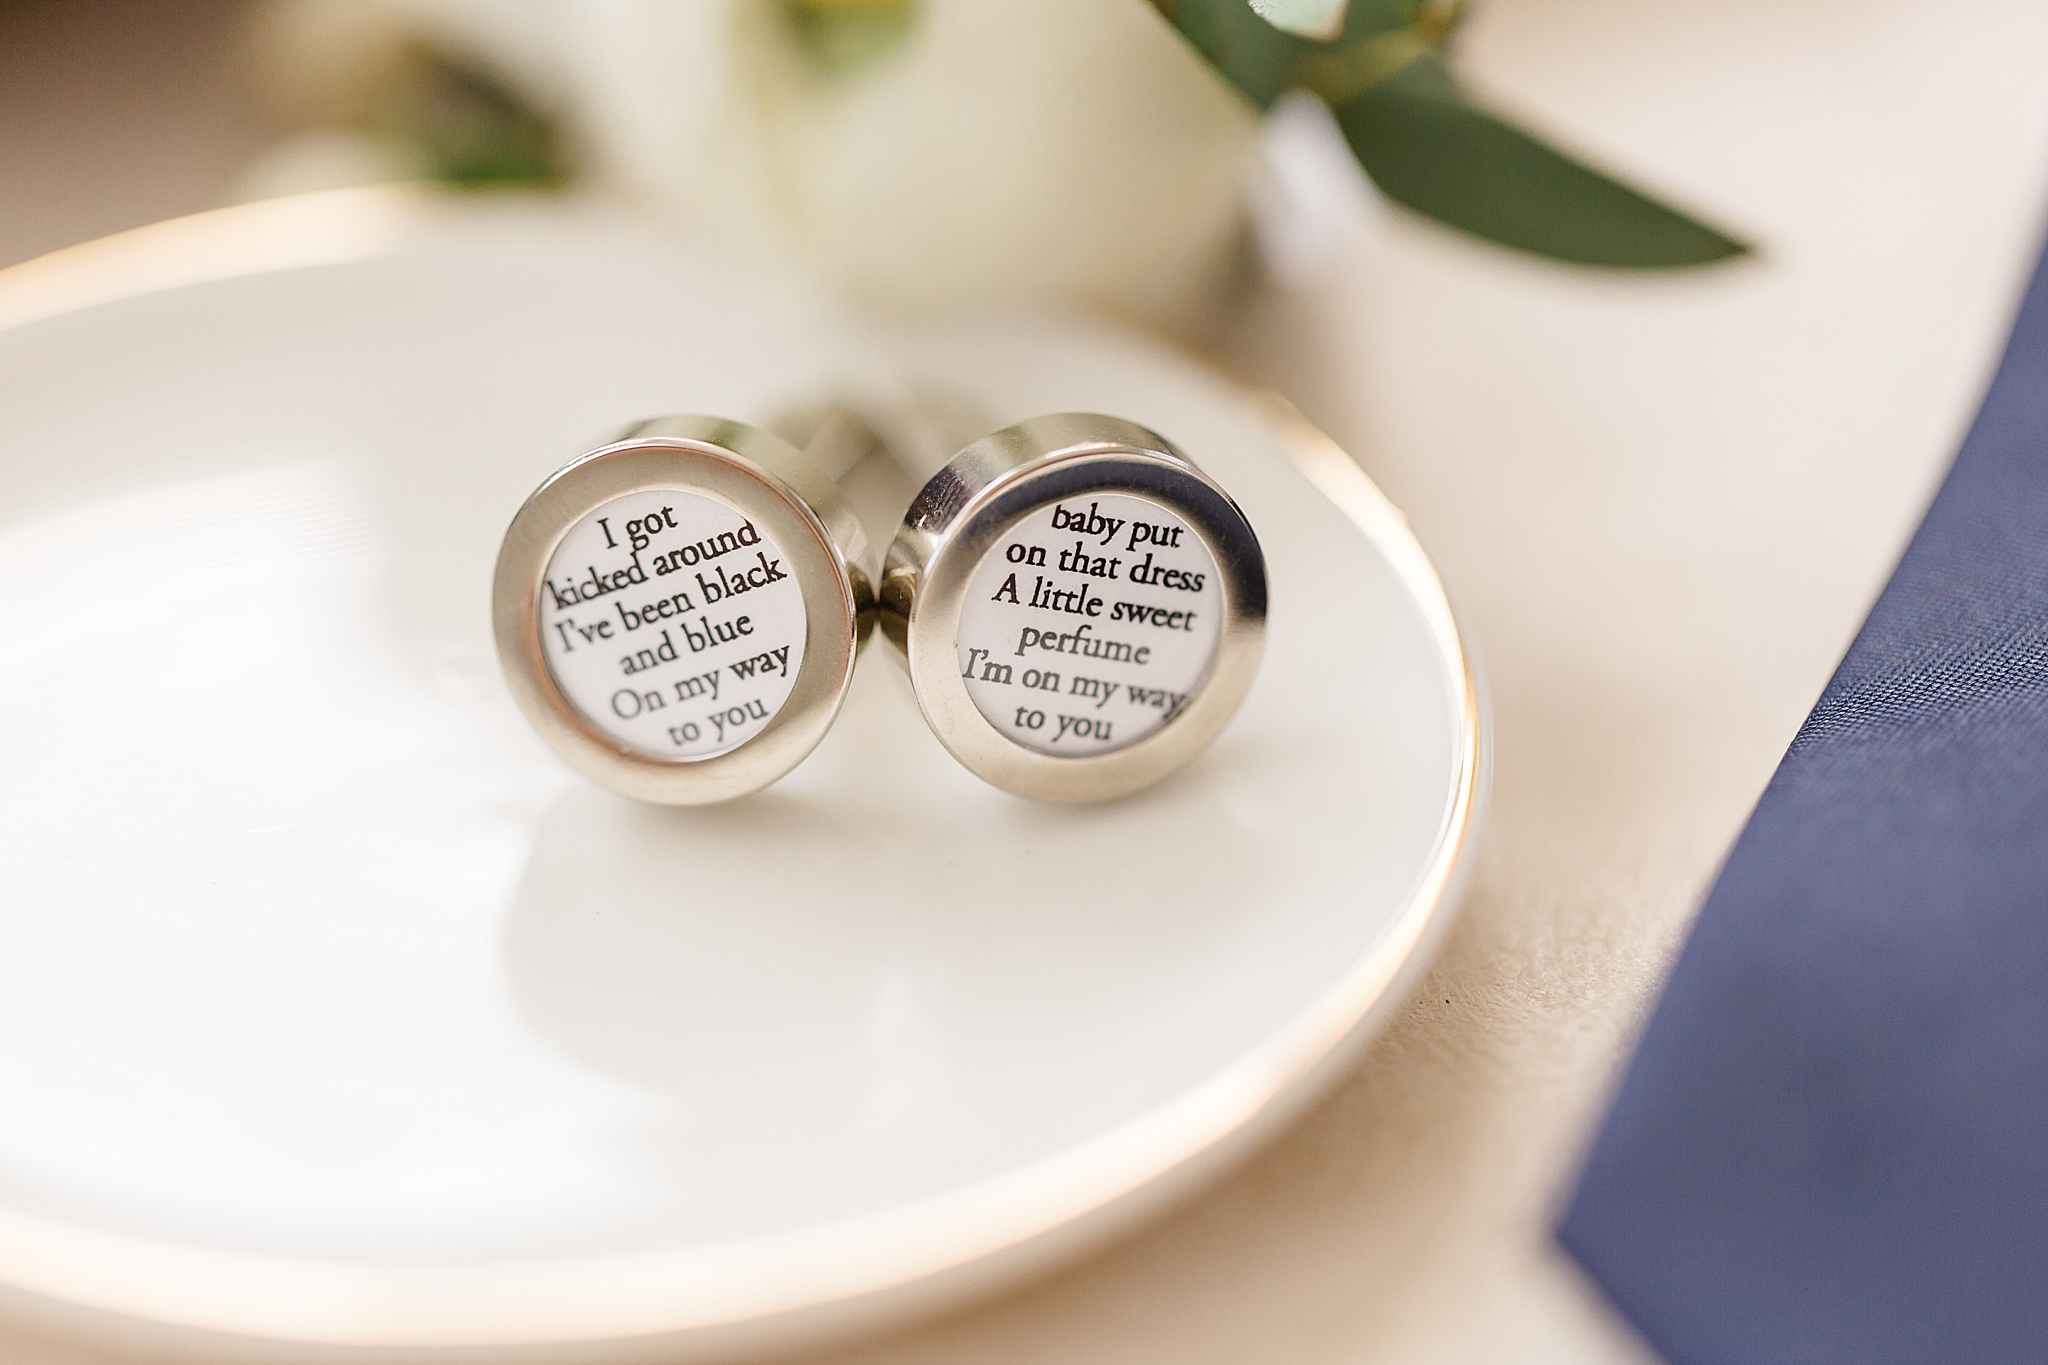 custom cufflinks for the groom with song lyrics